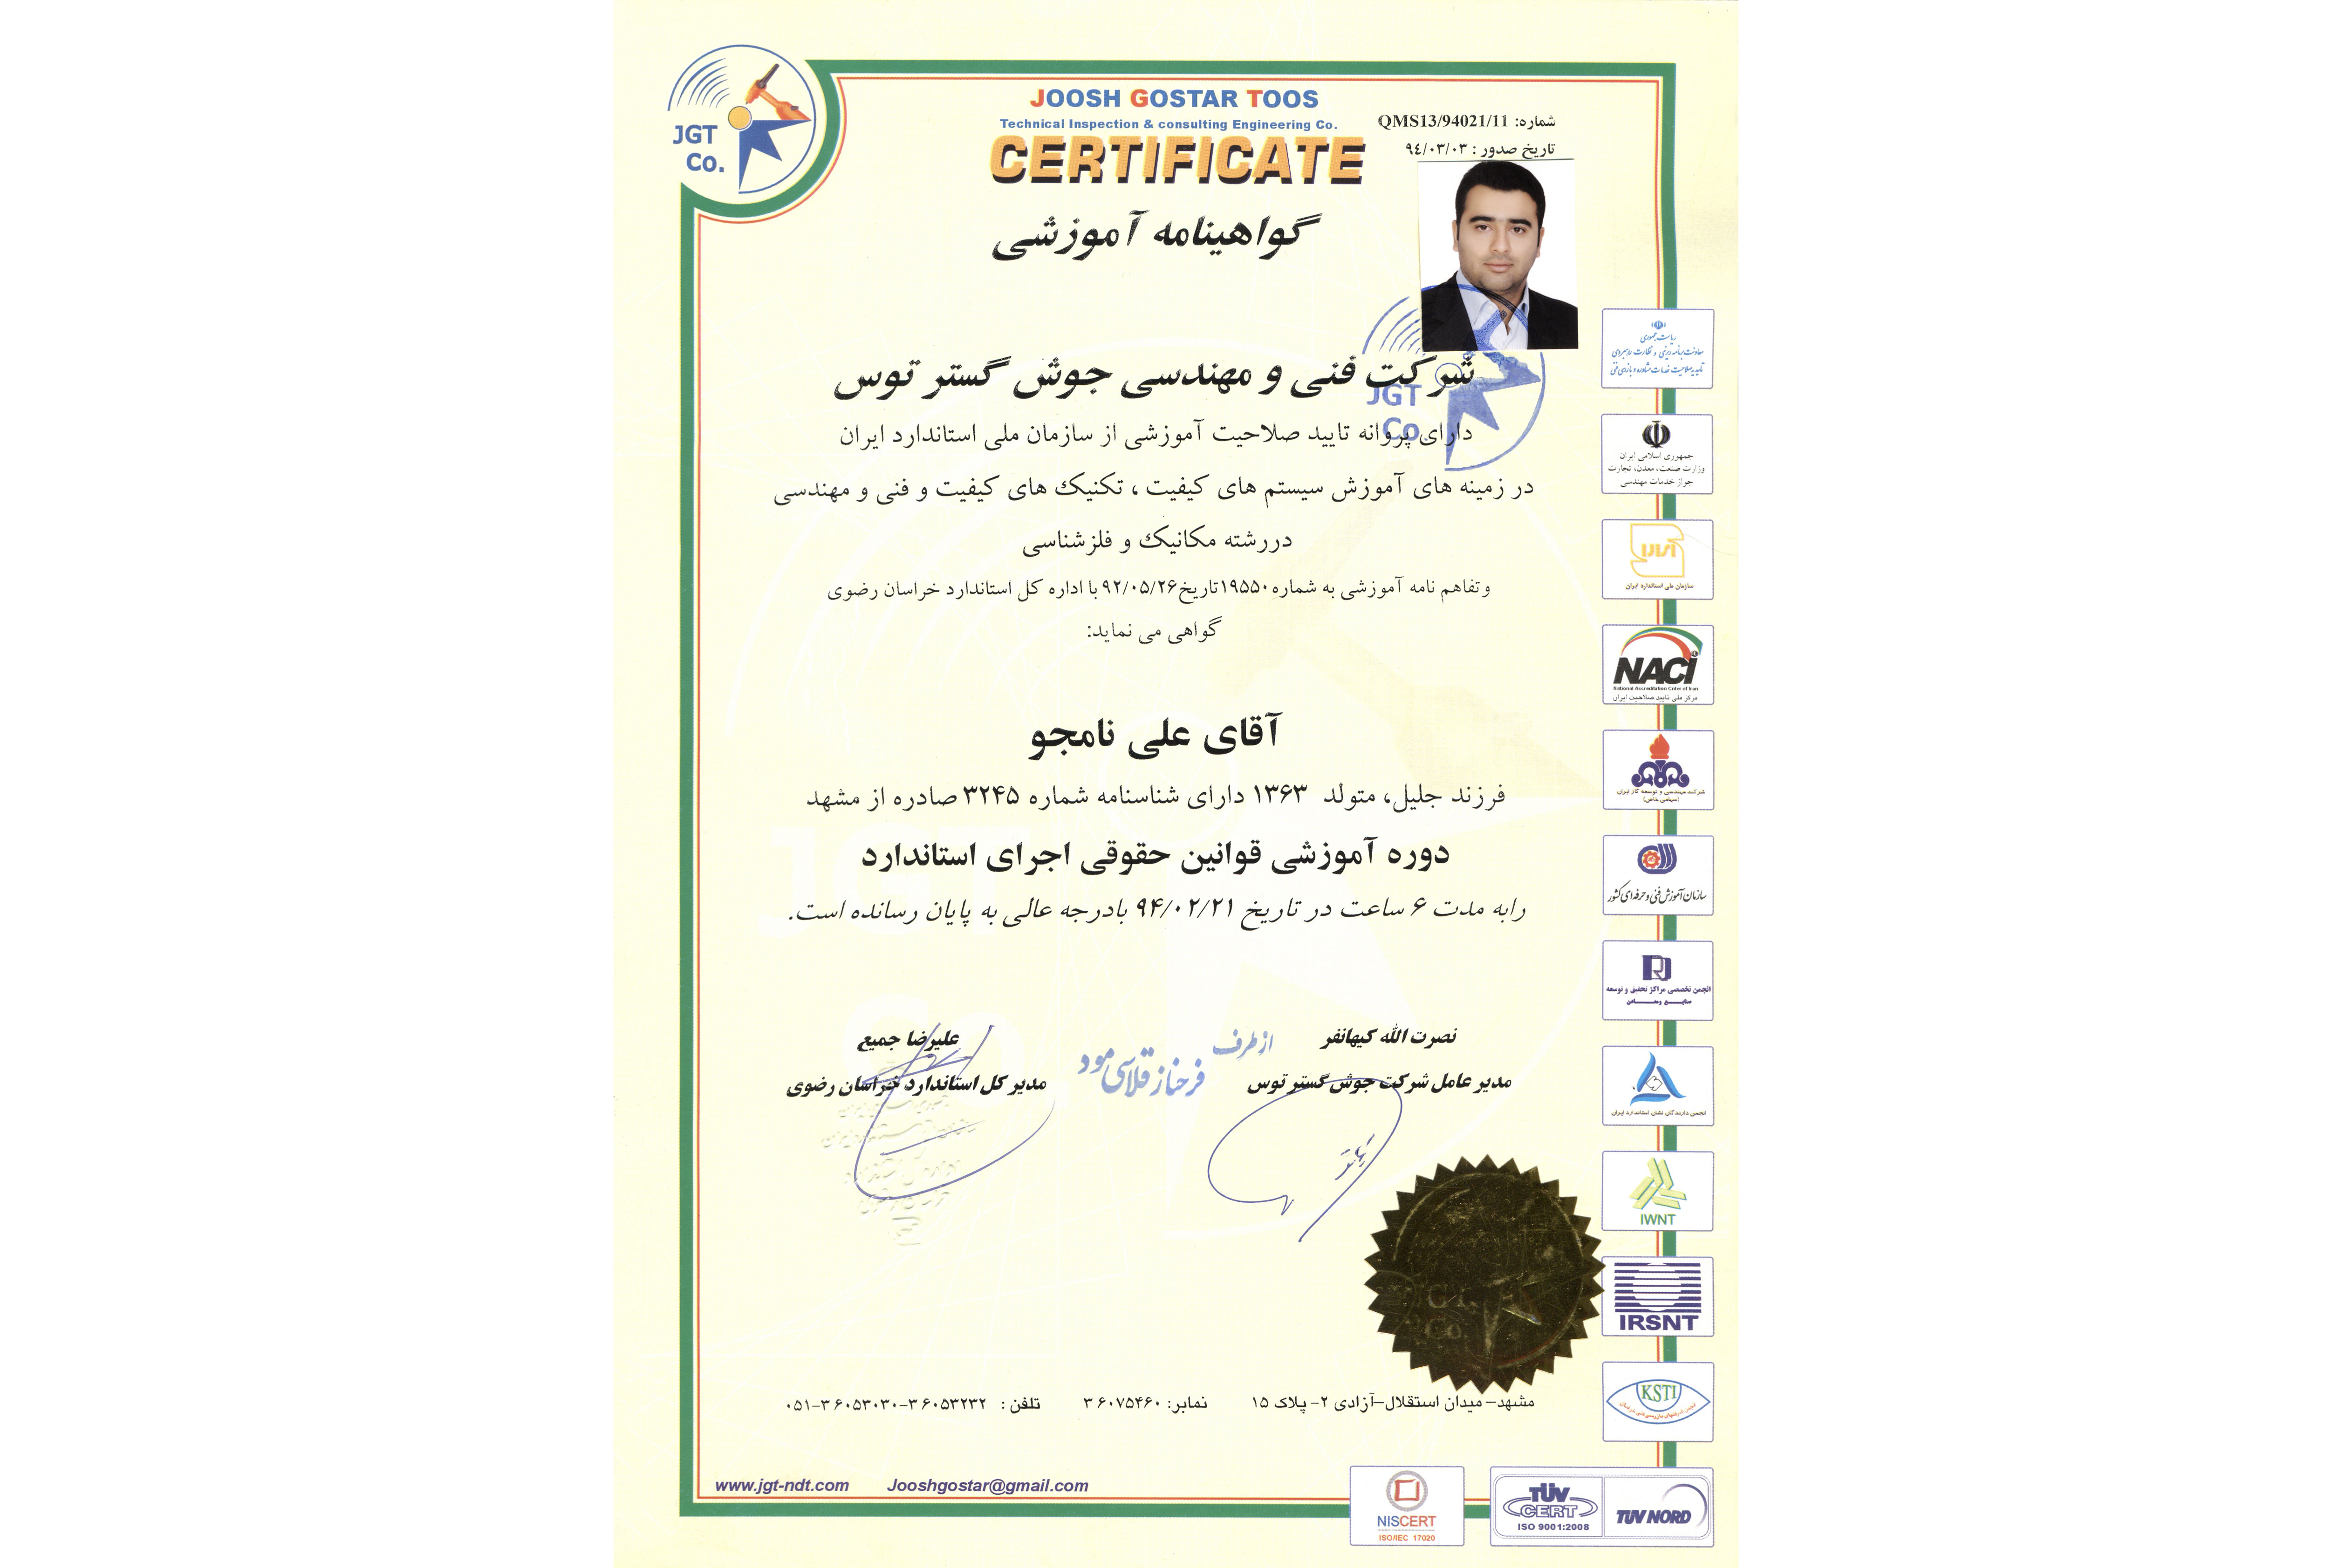 Certification training